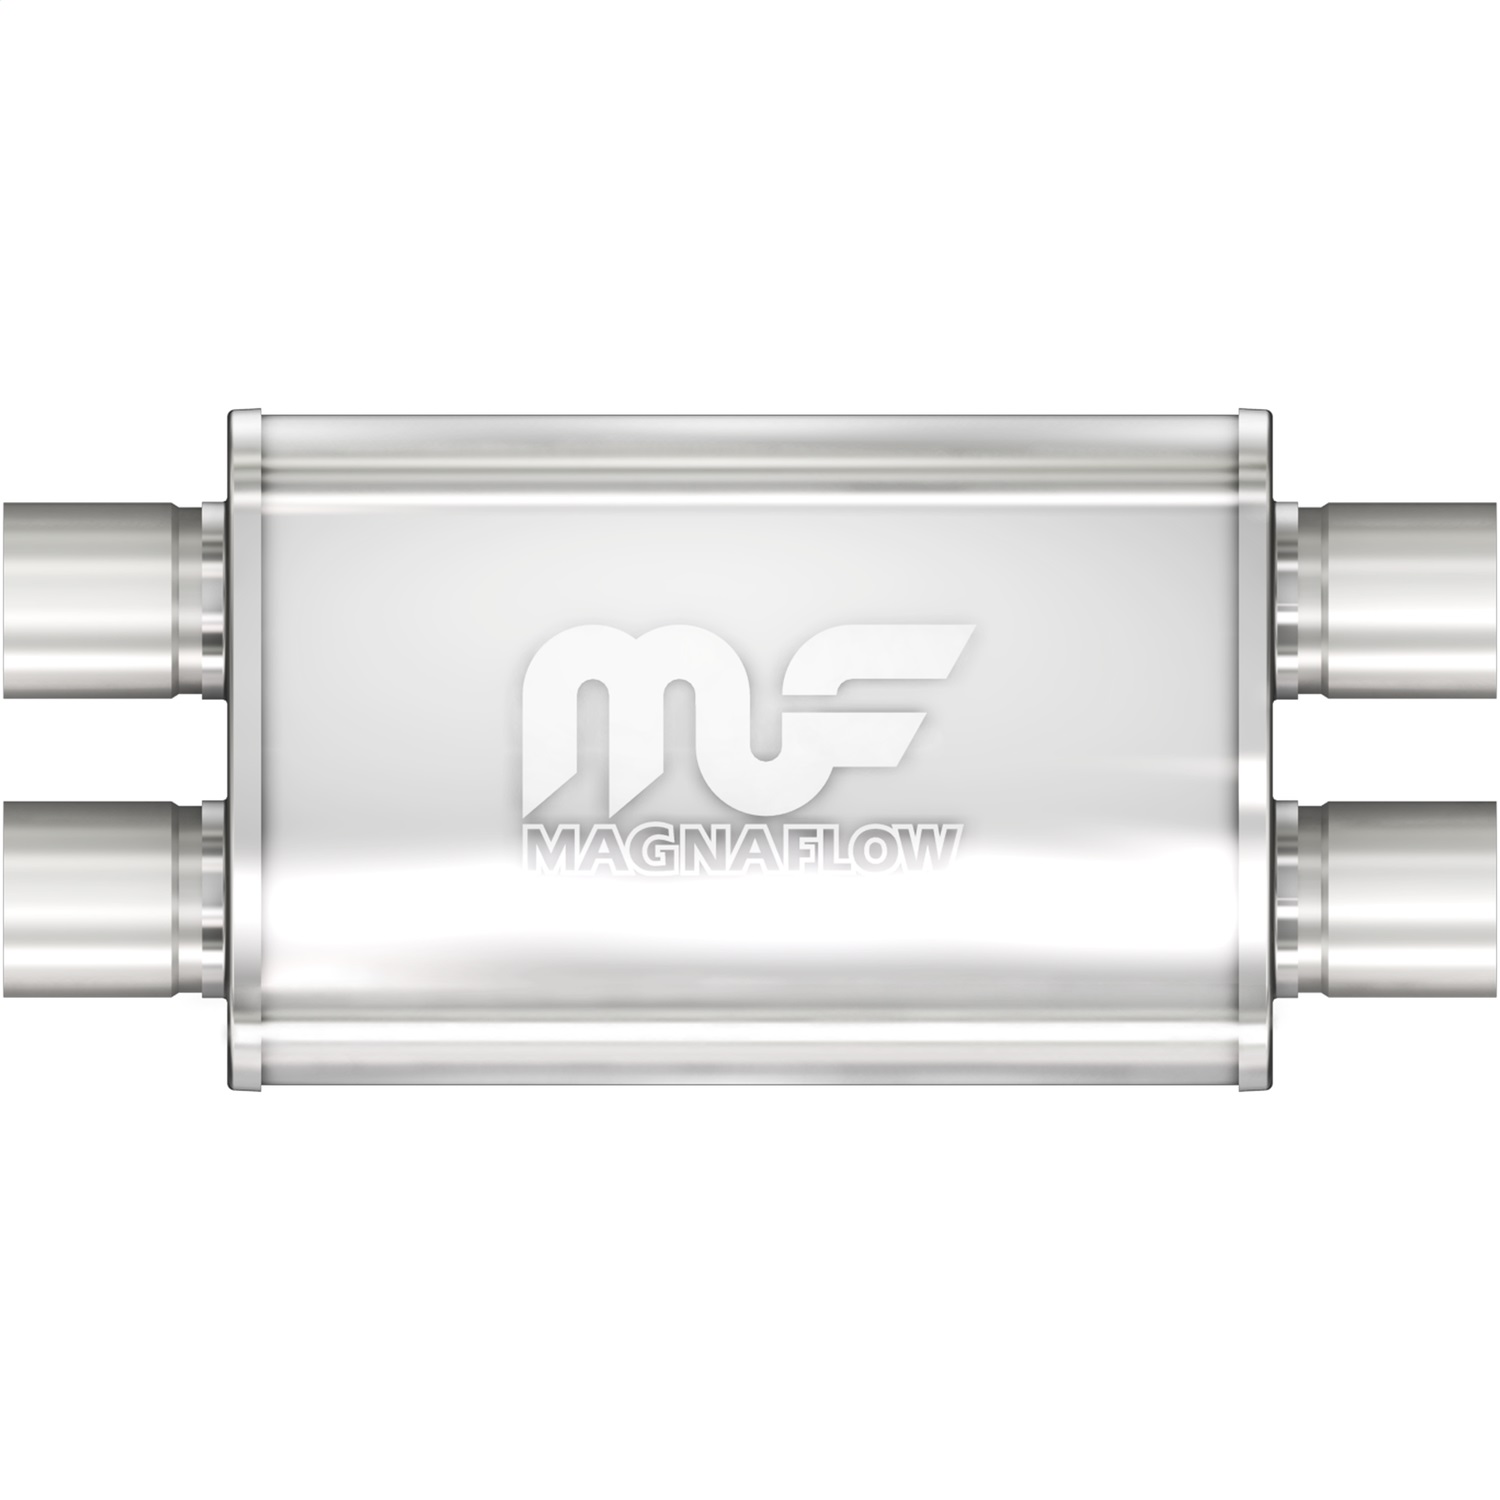 Magnaflow Performance Exhaust Magnaflow Performance Exhaust 11385 Stainless Steel Muffler